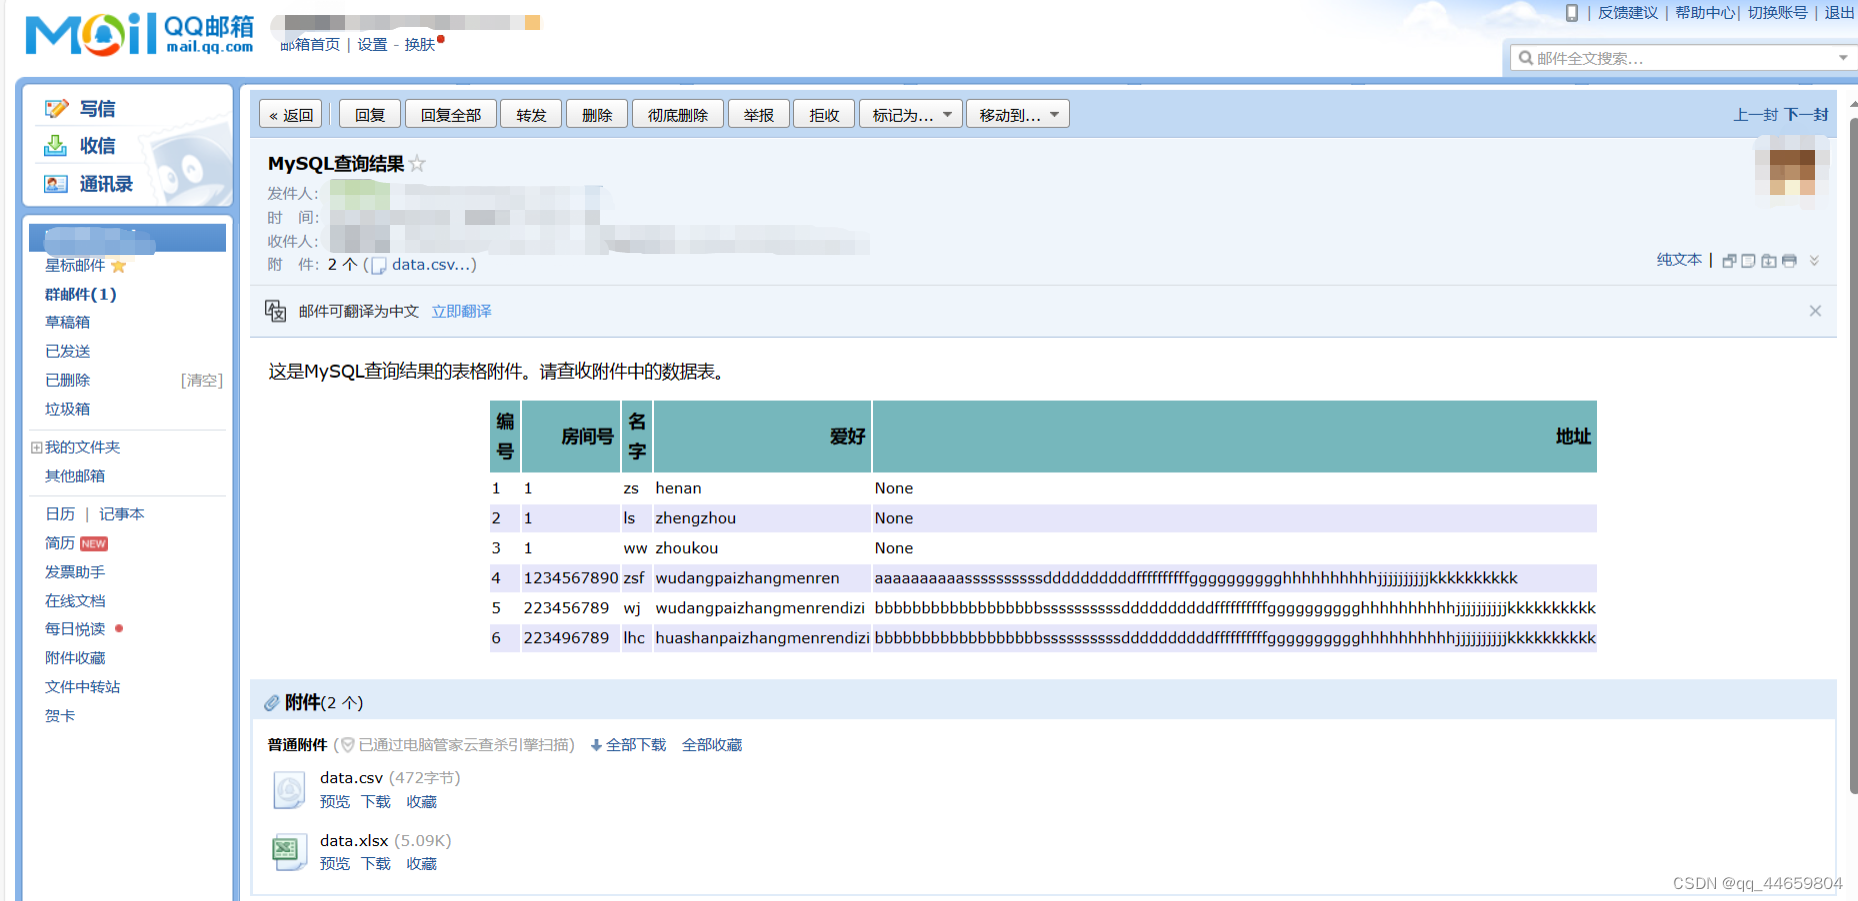 python查询数据库发送邮件，附件csv格式，xlsx格式